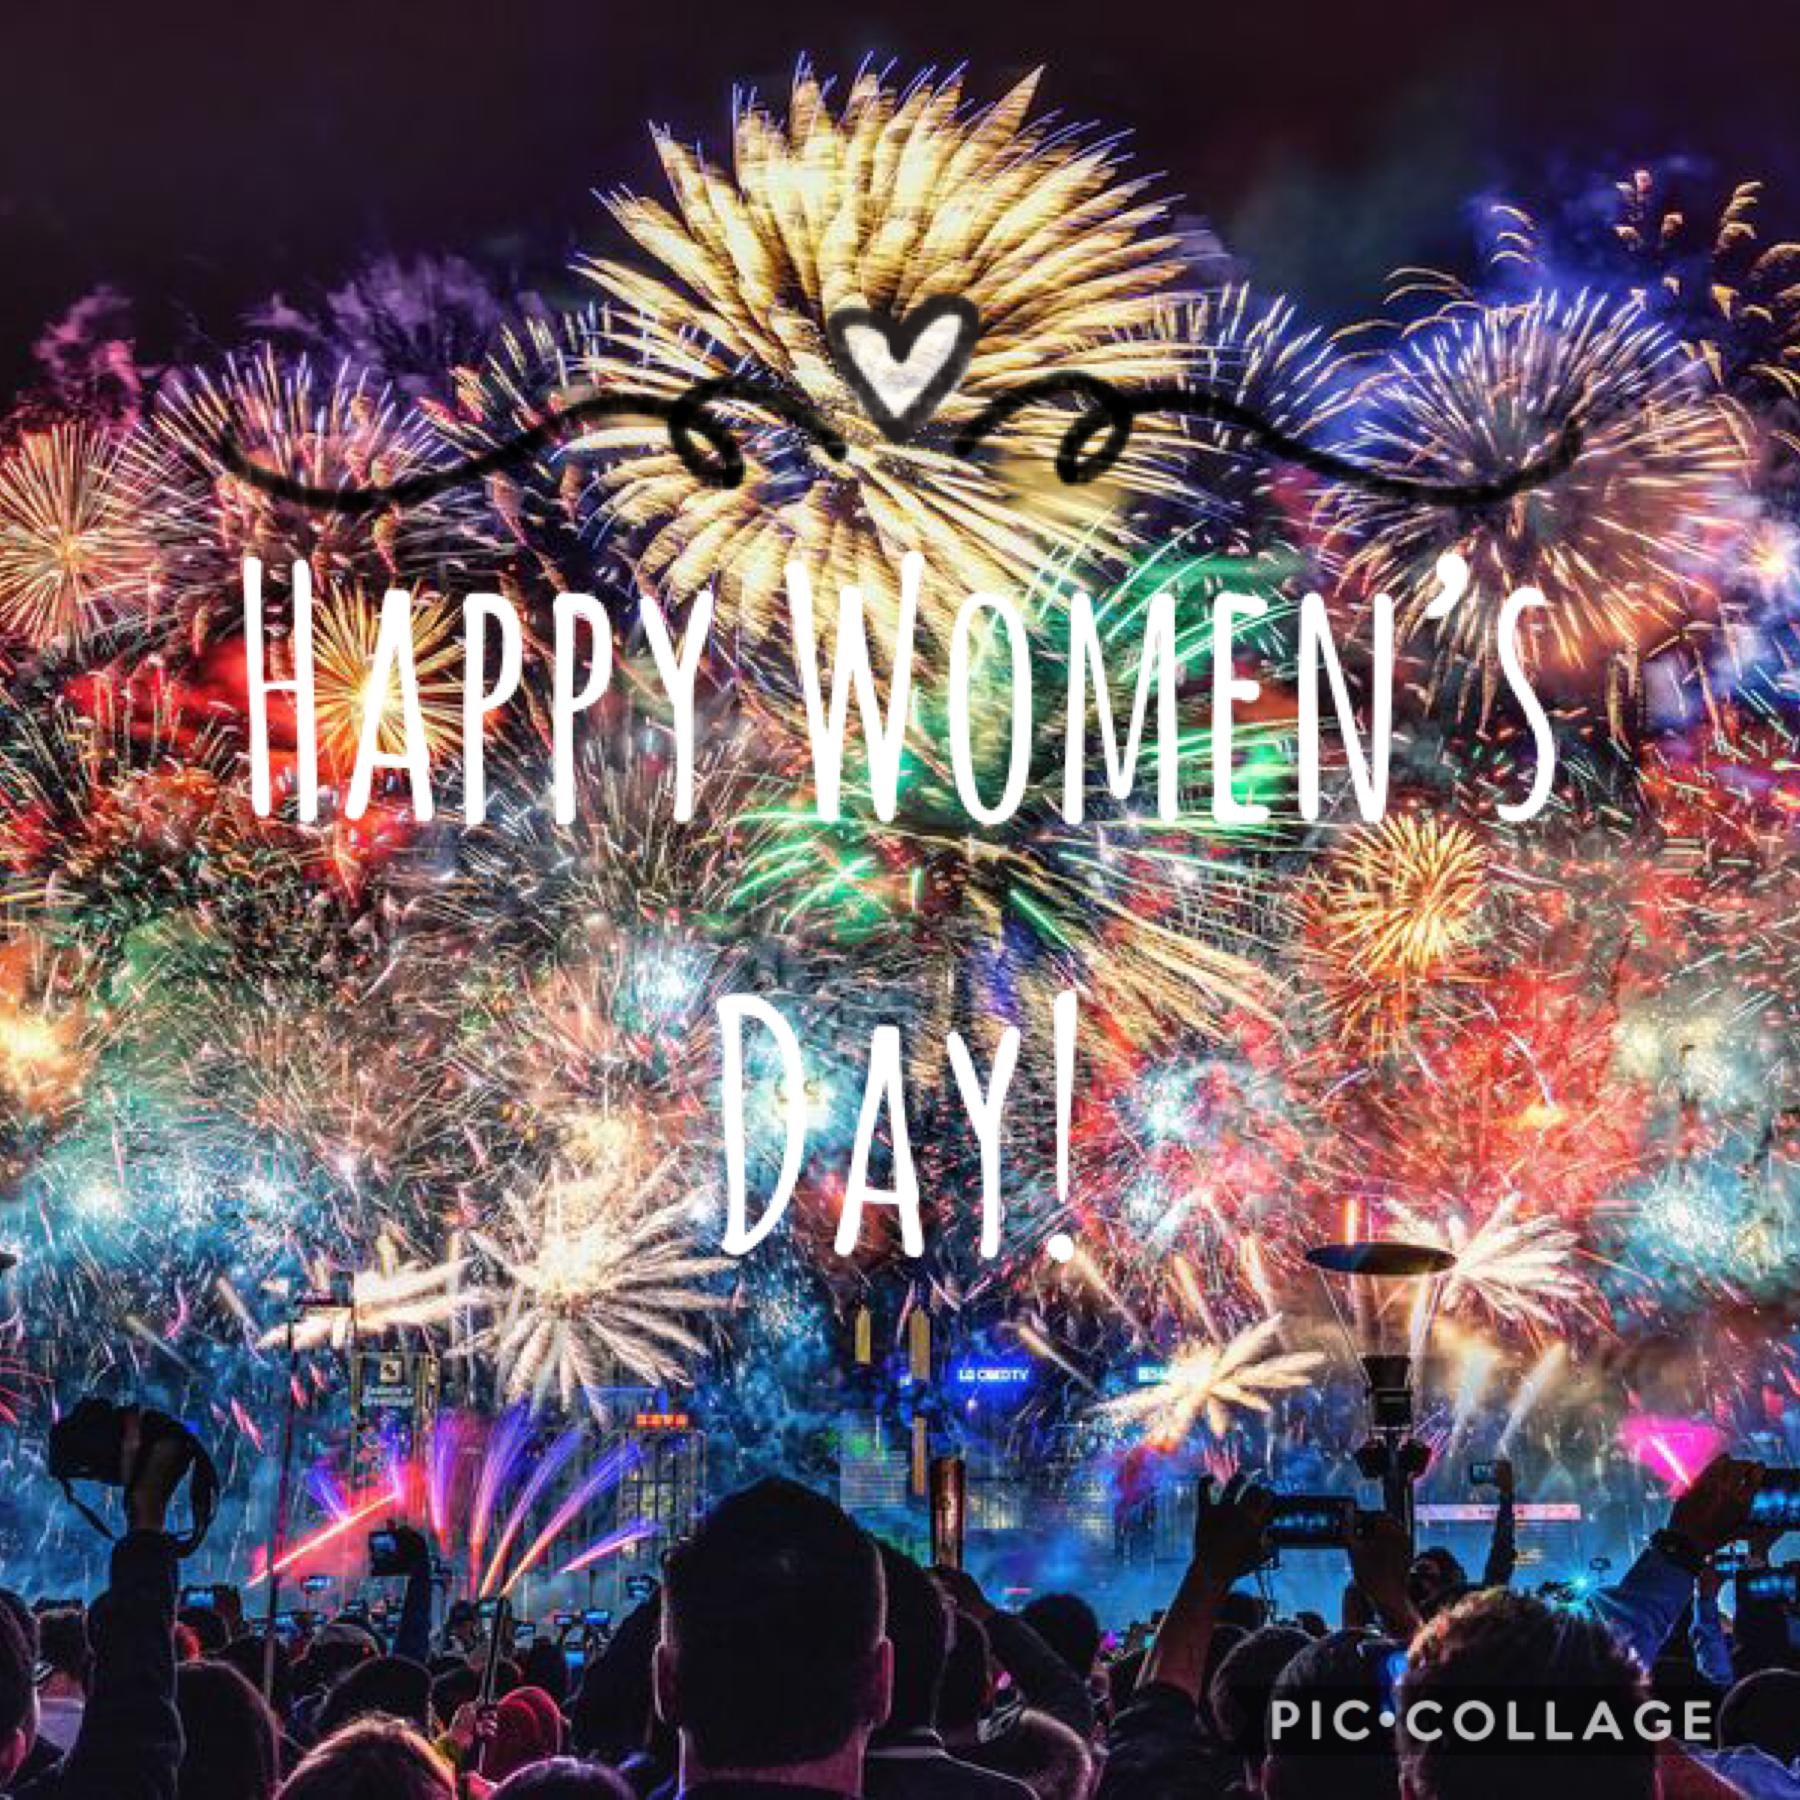 Happy women’s day!